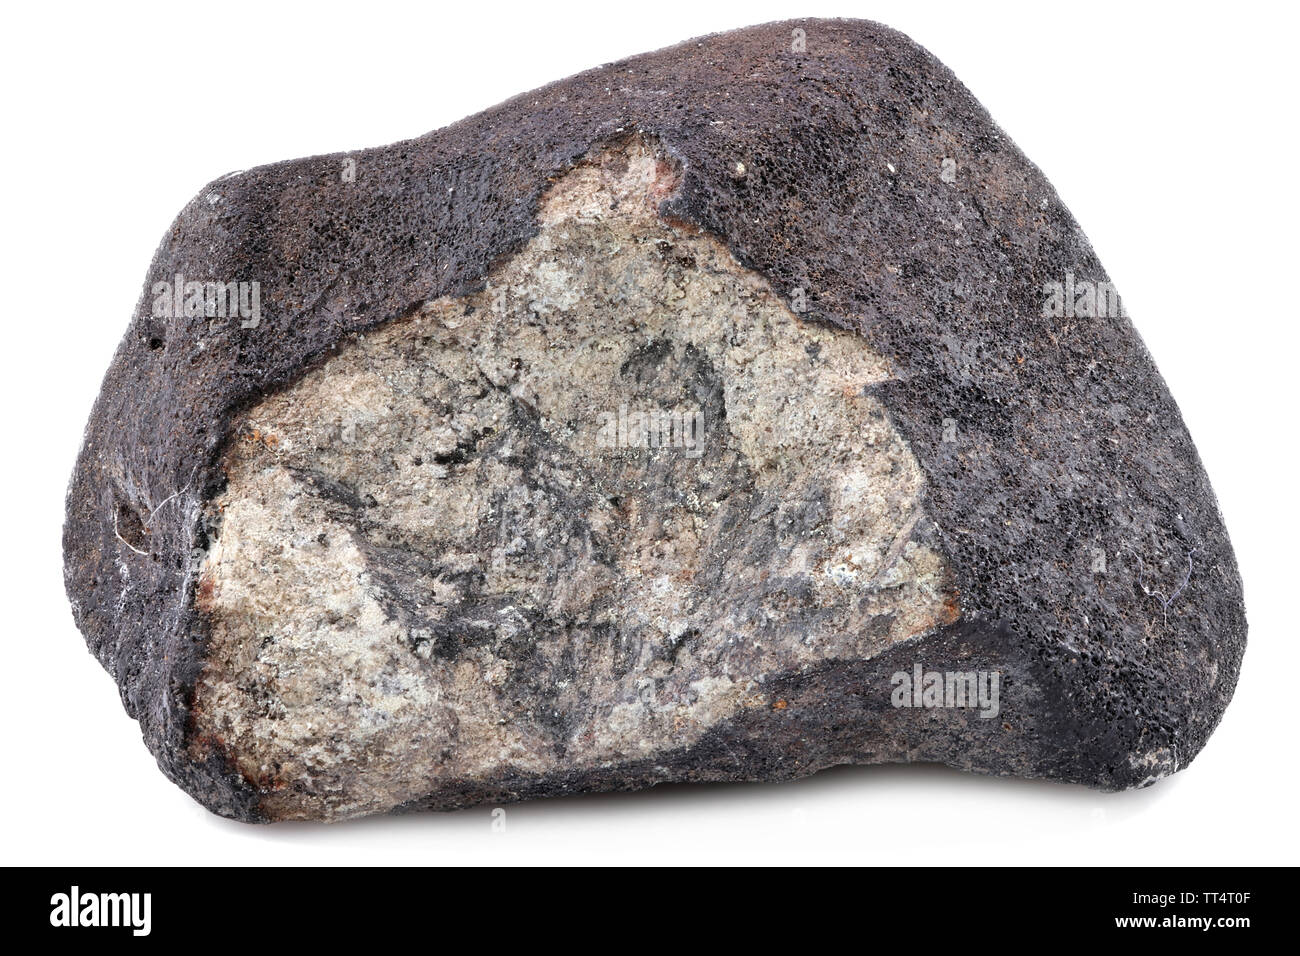 fragment of the Chelyabinsk meteorite (fallen 15 February 2013) isolated on white background Stock Photo